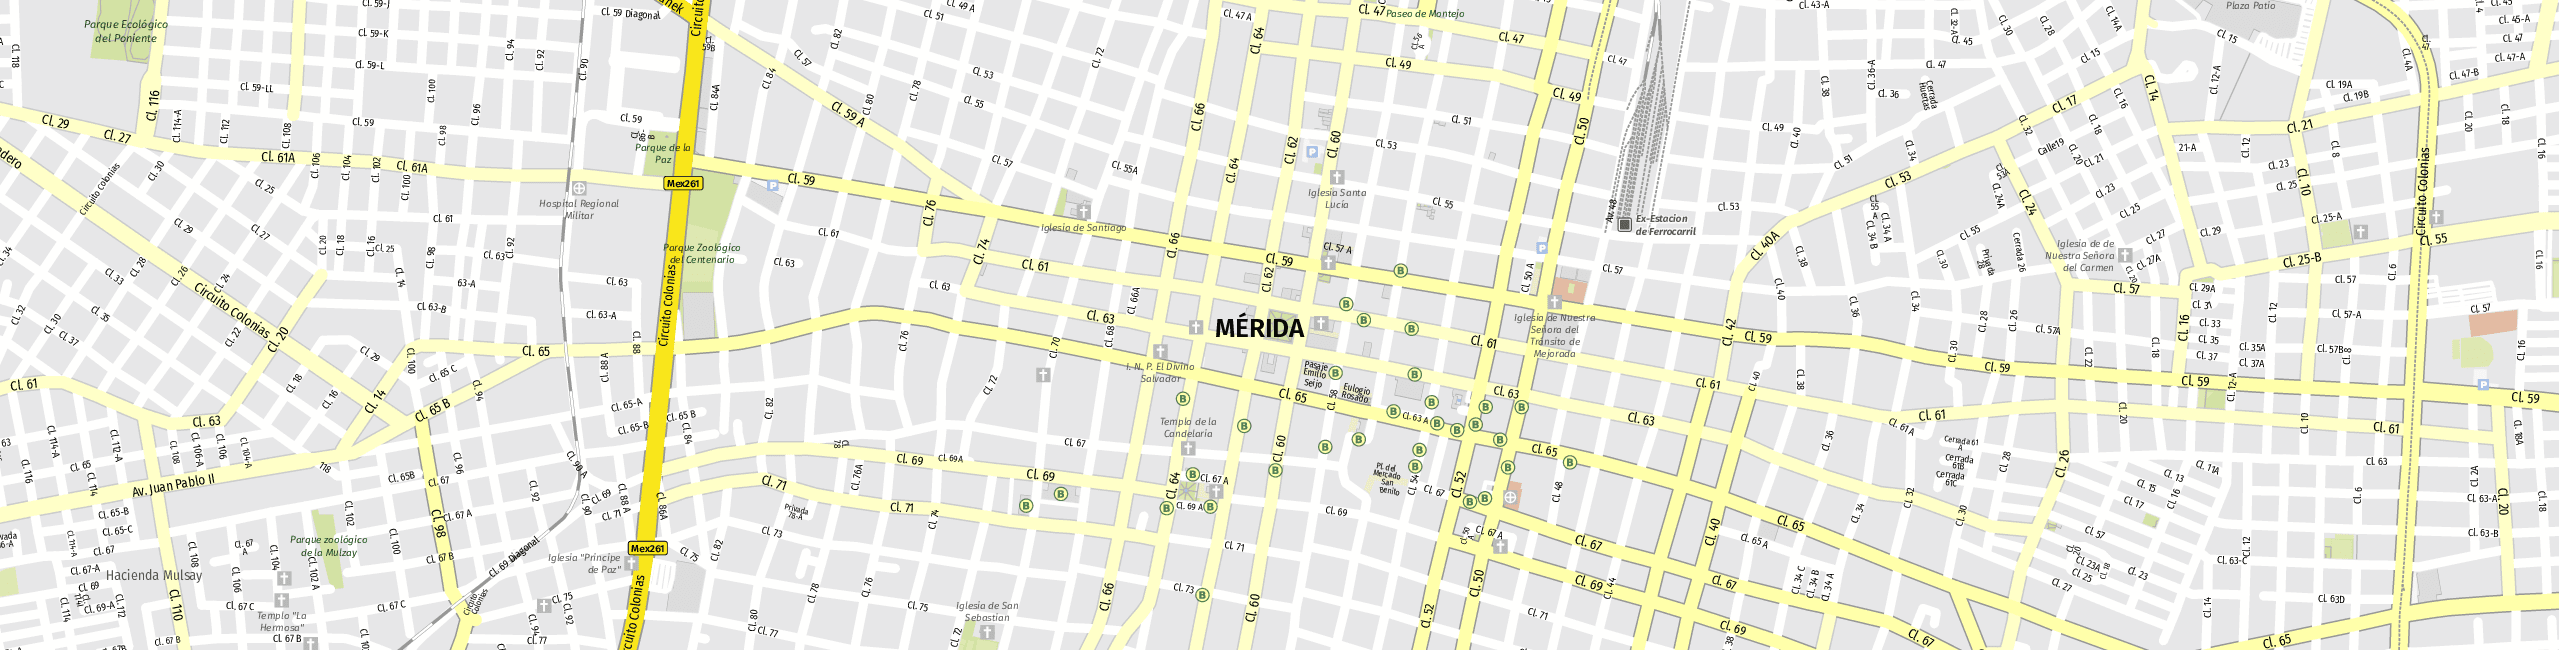 Stadtplan Mérida zum Downloaden.